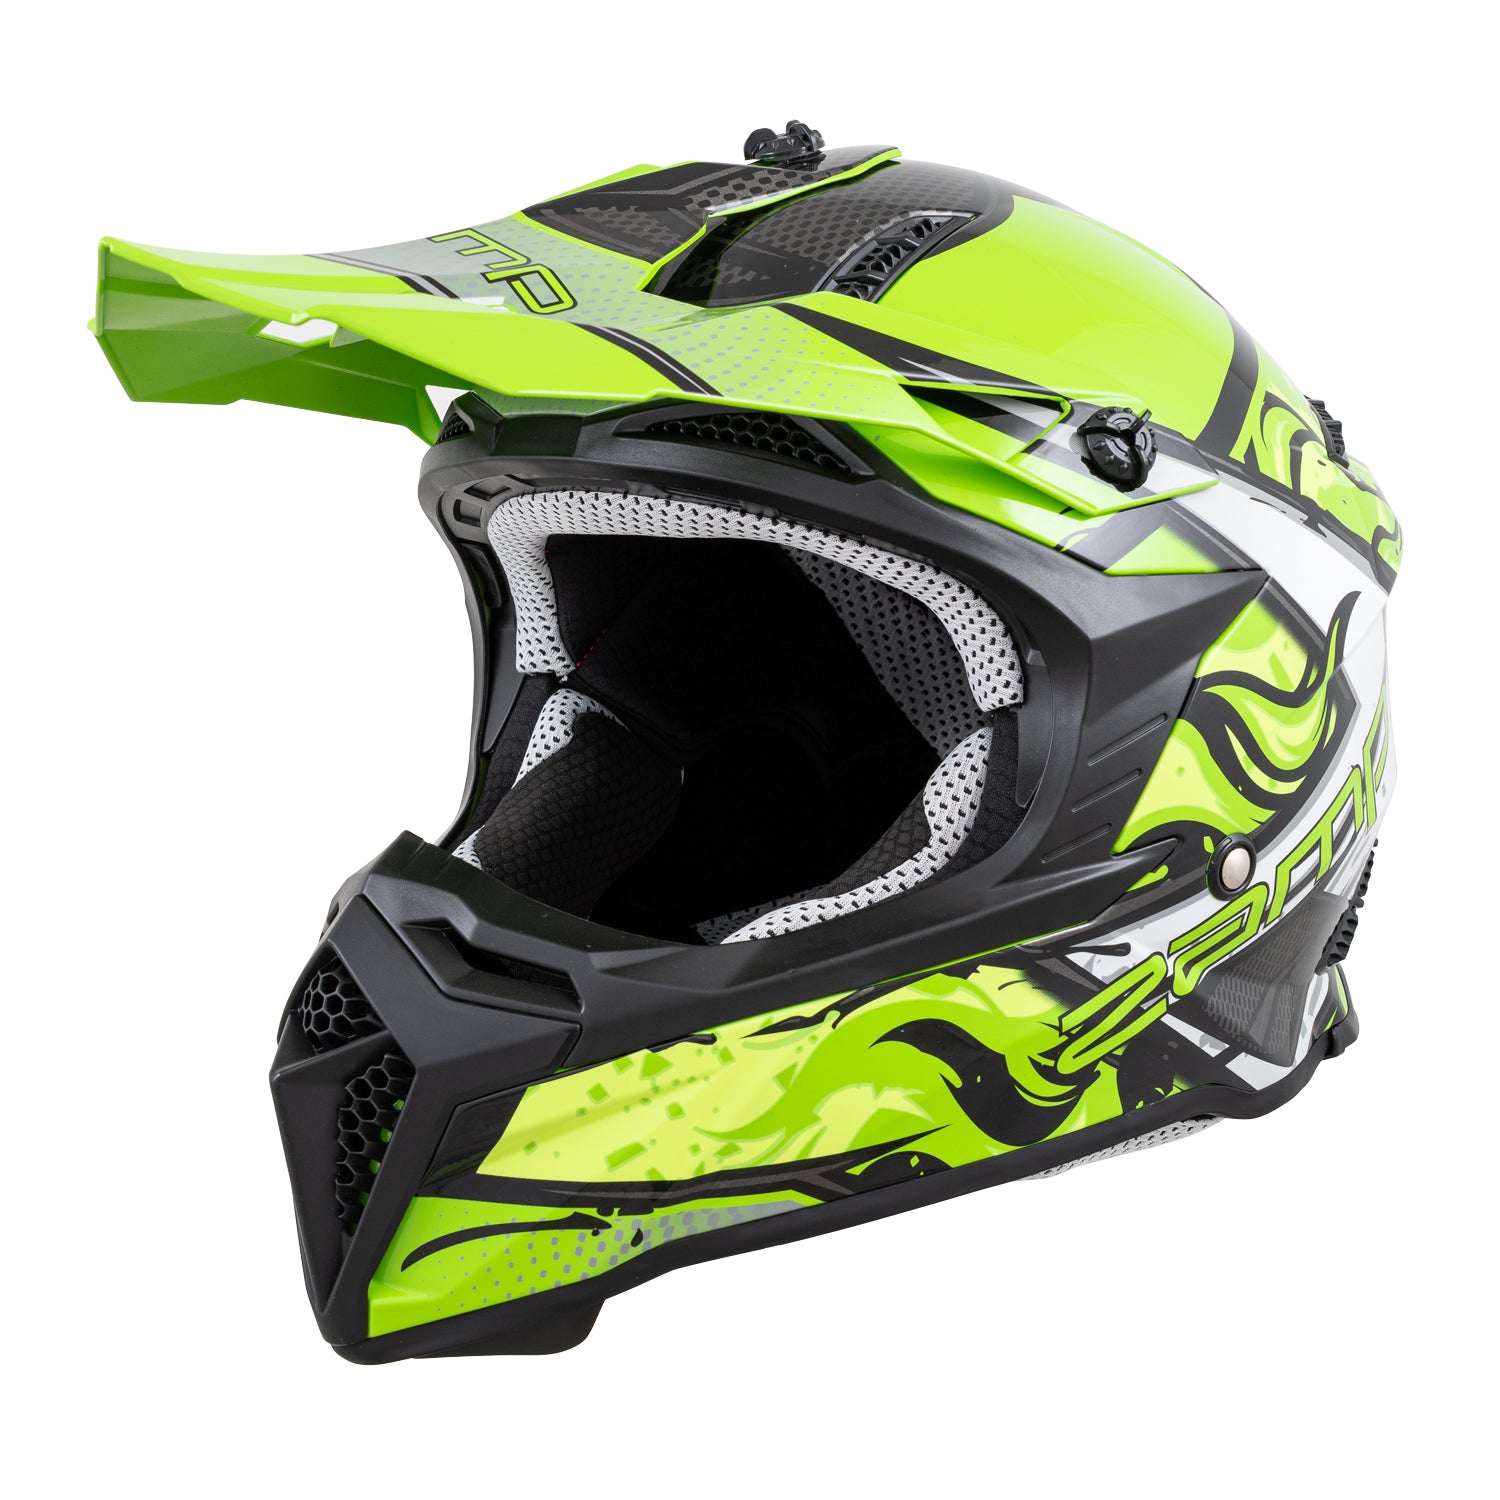 Zamp FX-4 Graphic Helmet, ECE22.05 & DOT